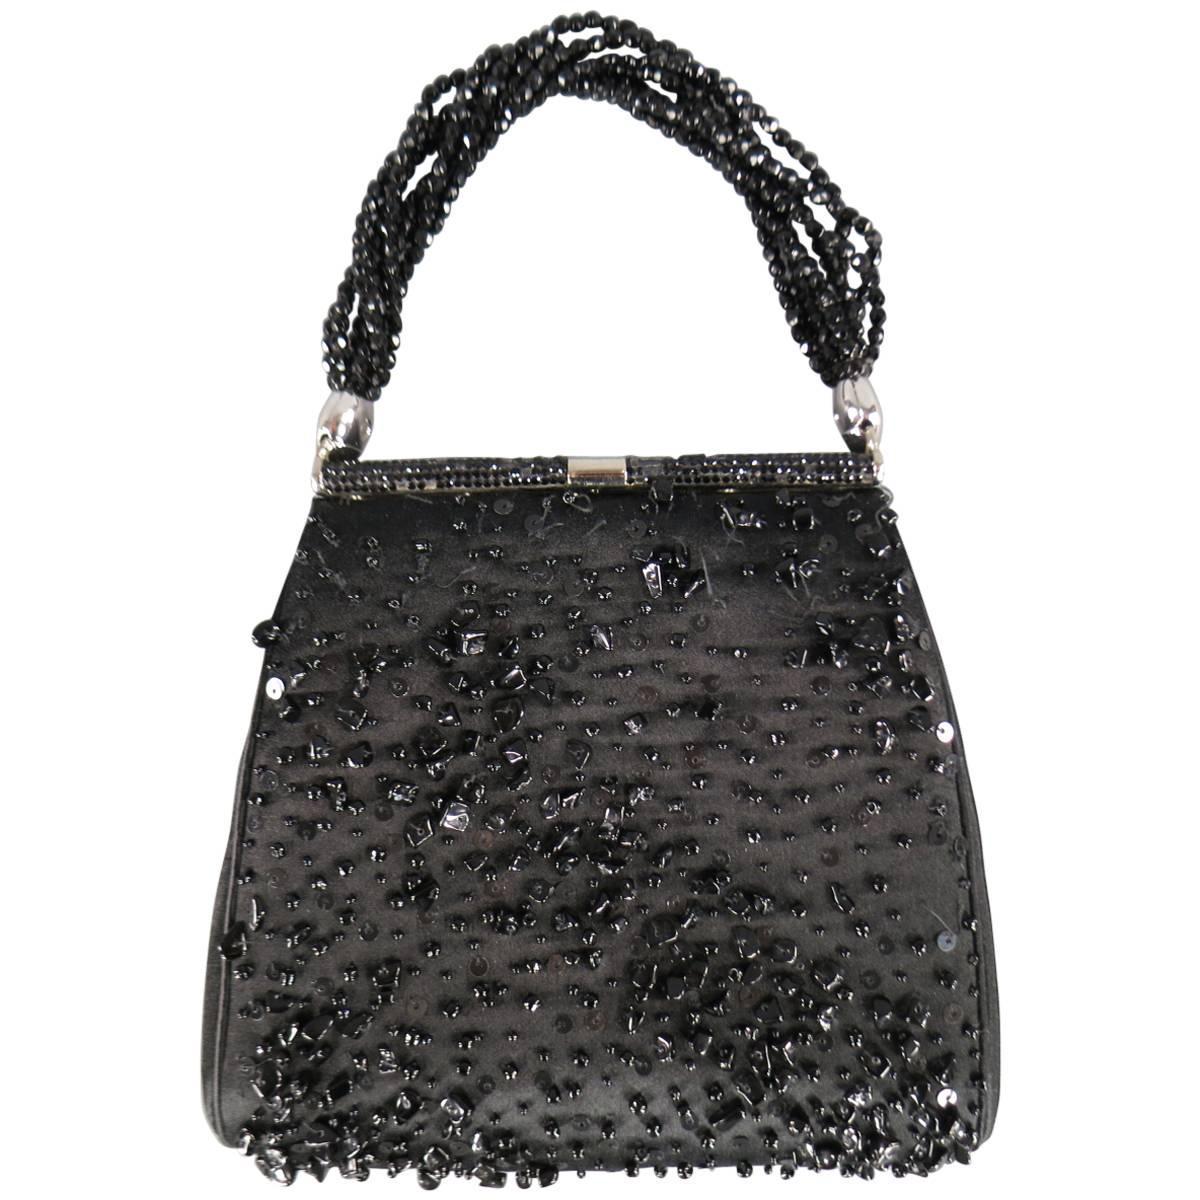 Vintage JUDITH LEIBER Black Beaded Satin Evening Handbag For Sale at 1stdibs